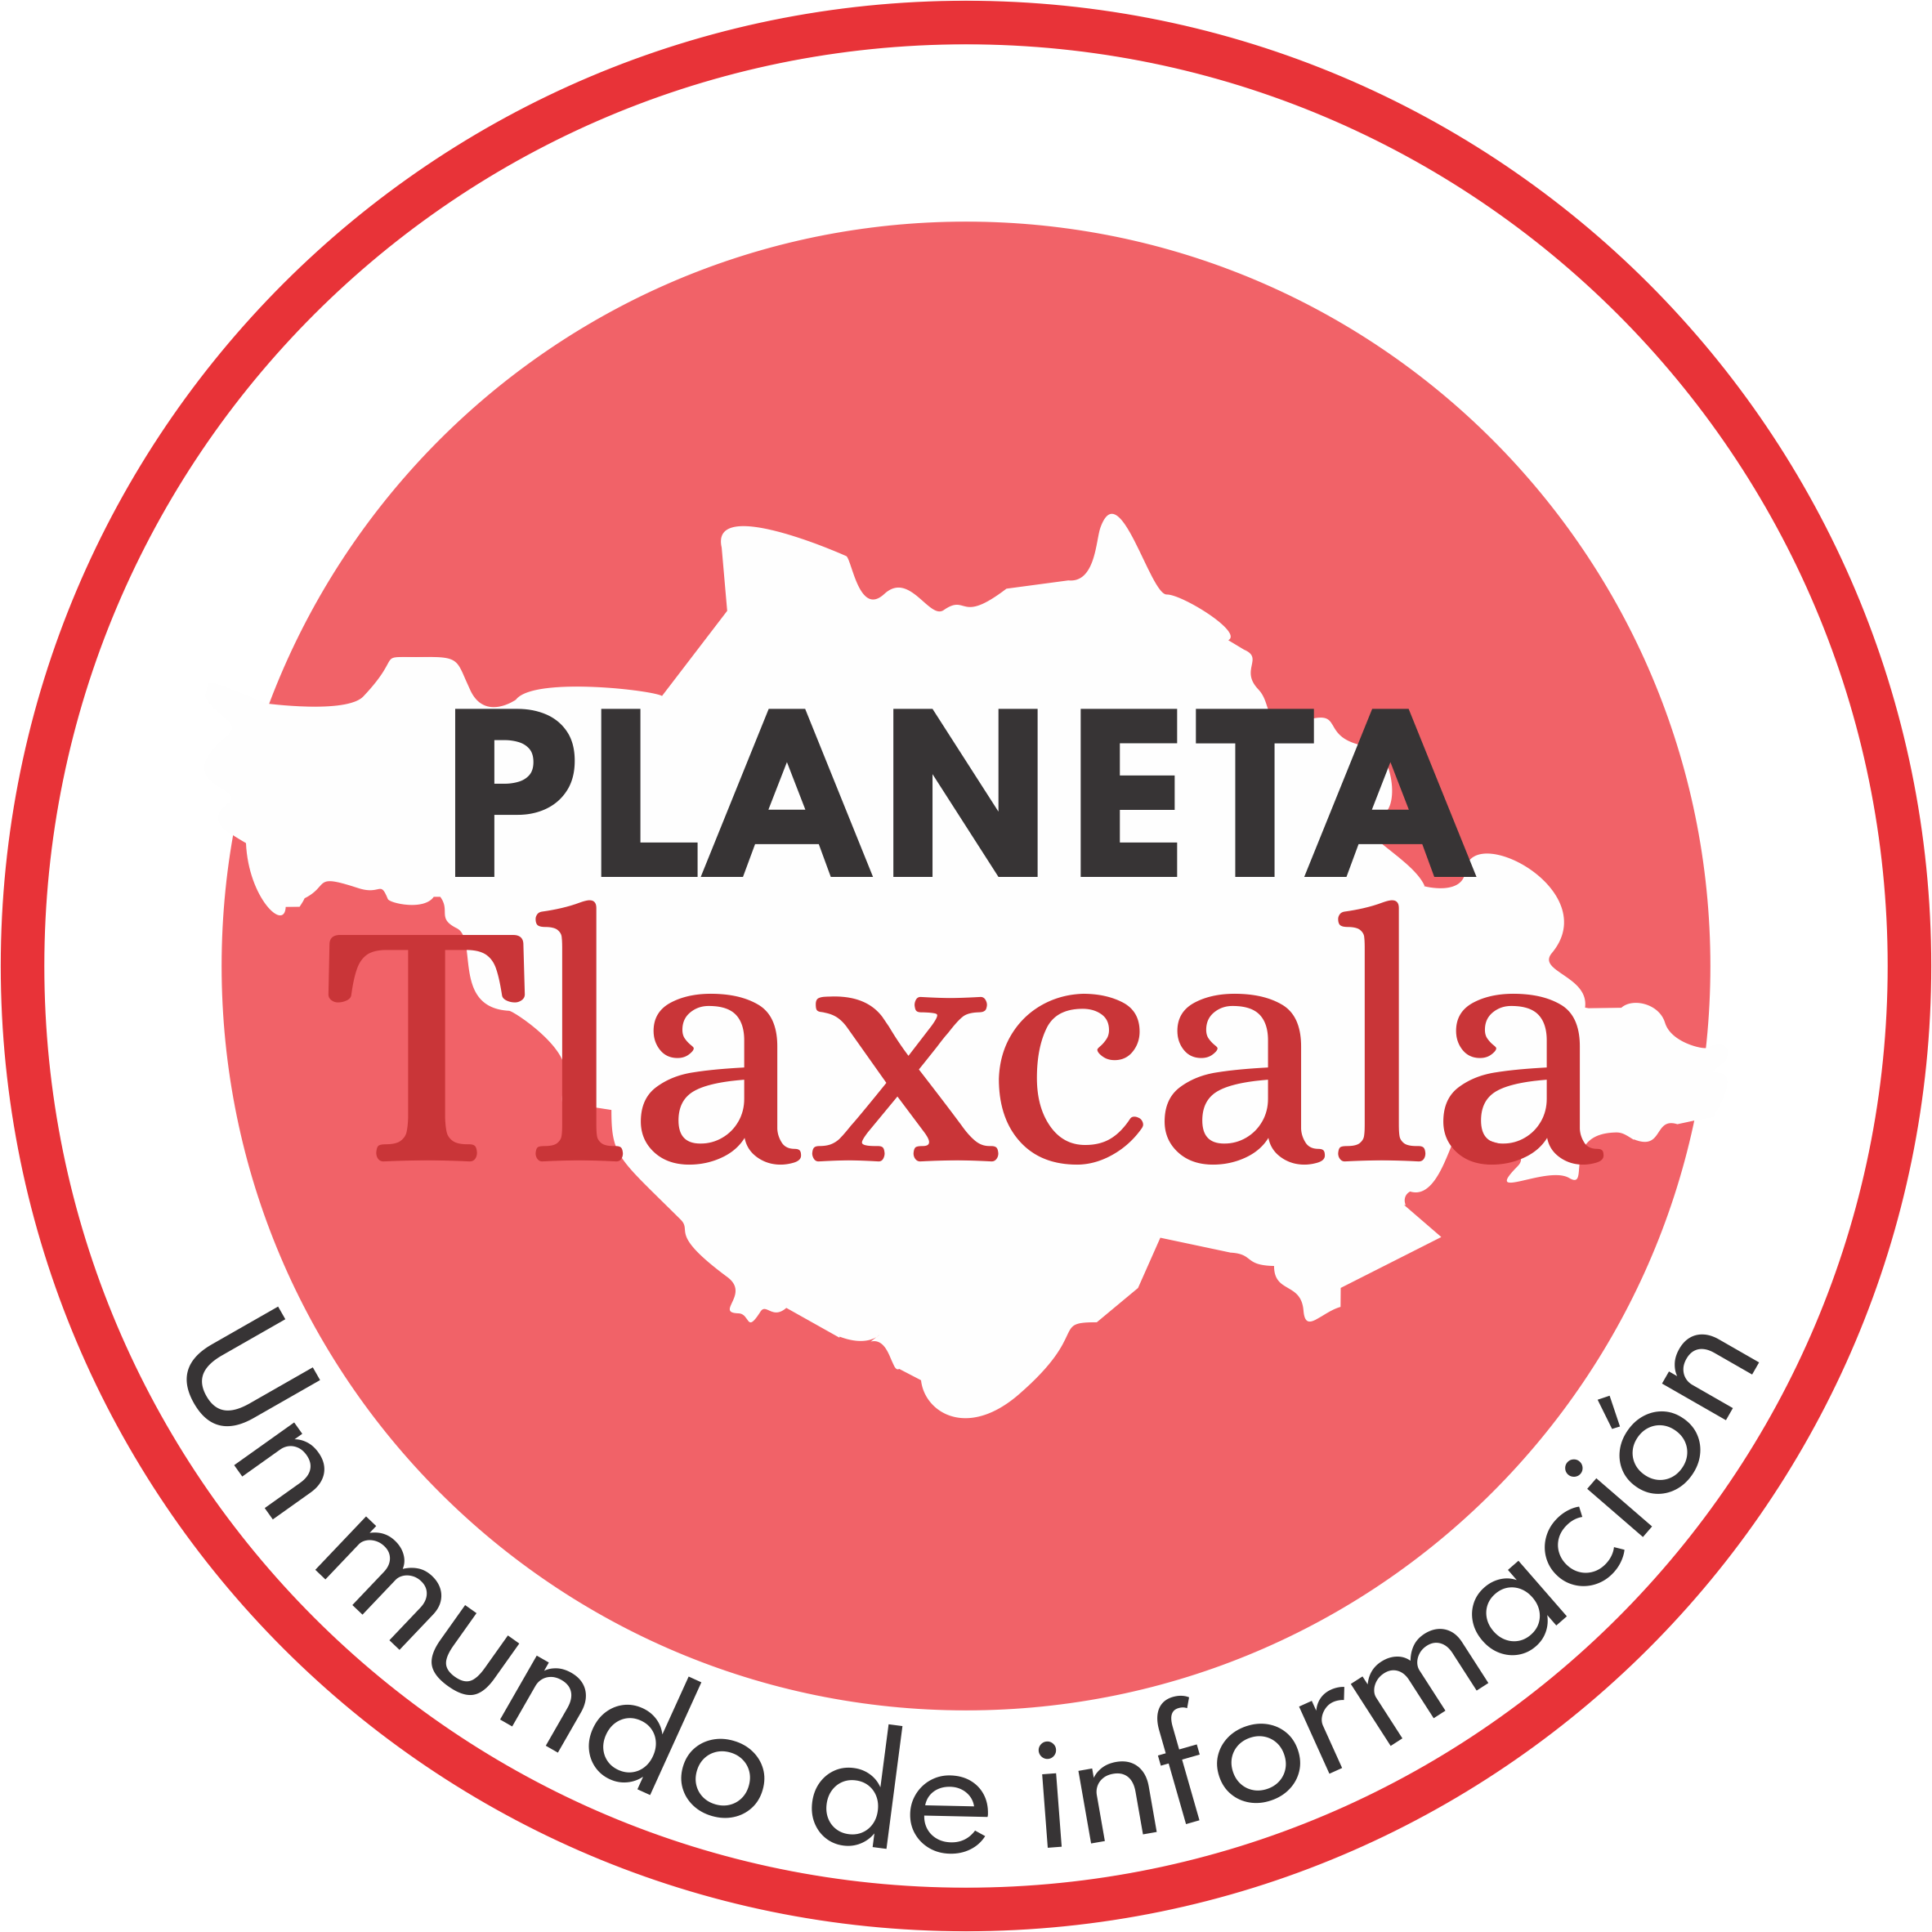 Planeta Tlaxcala